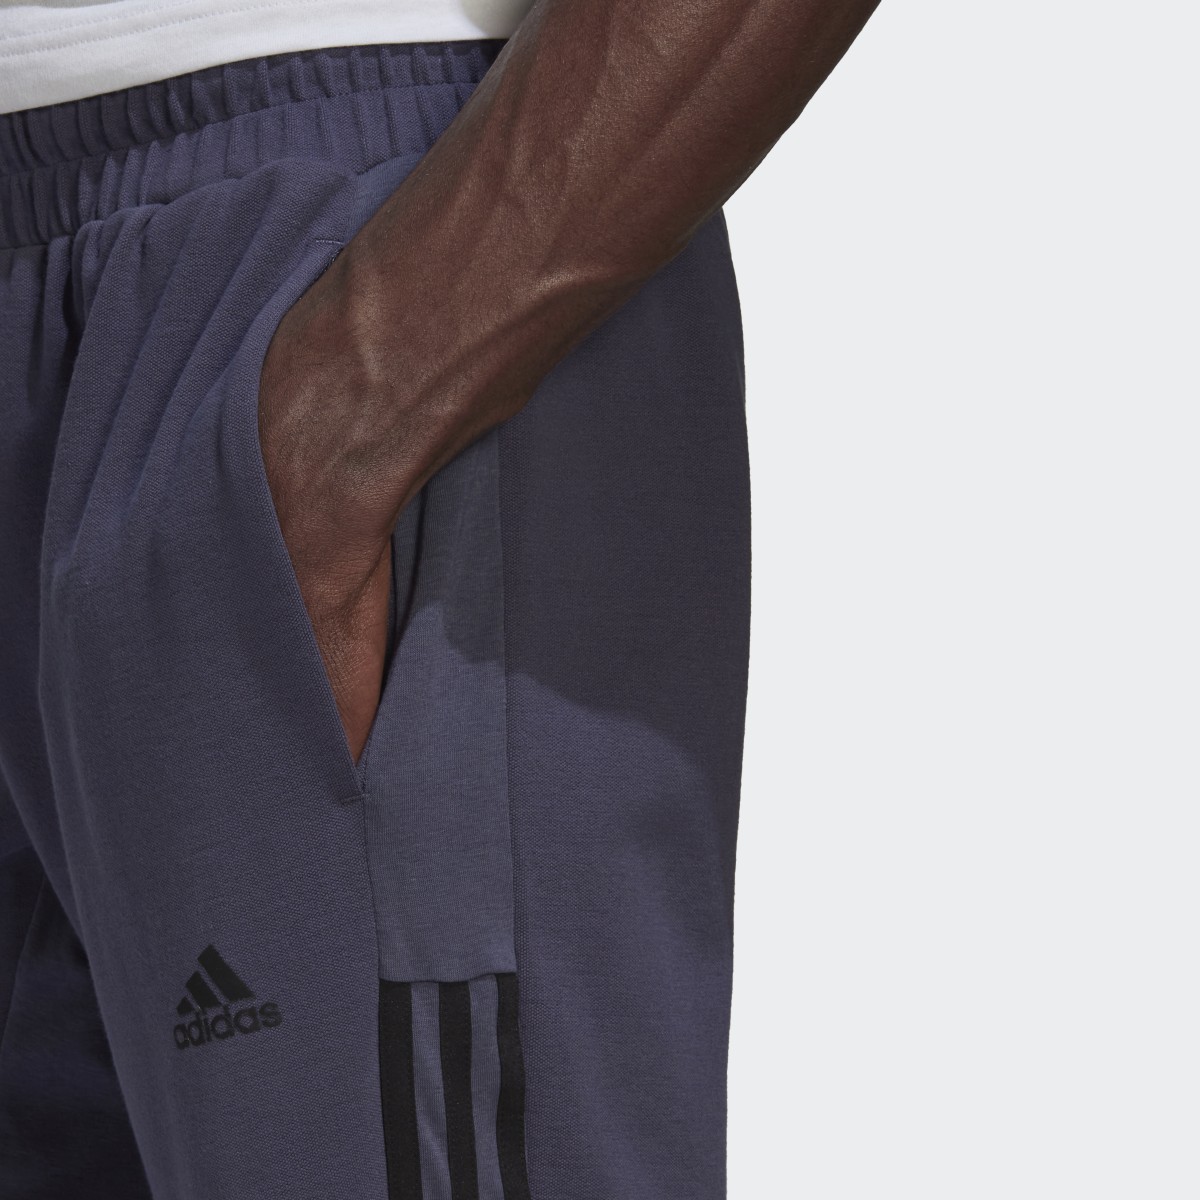 Adidas AEROREADY Yoga Pants. 6